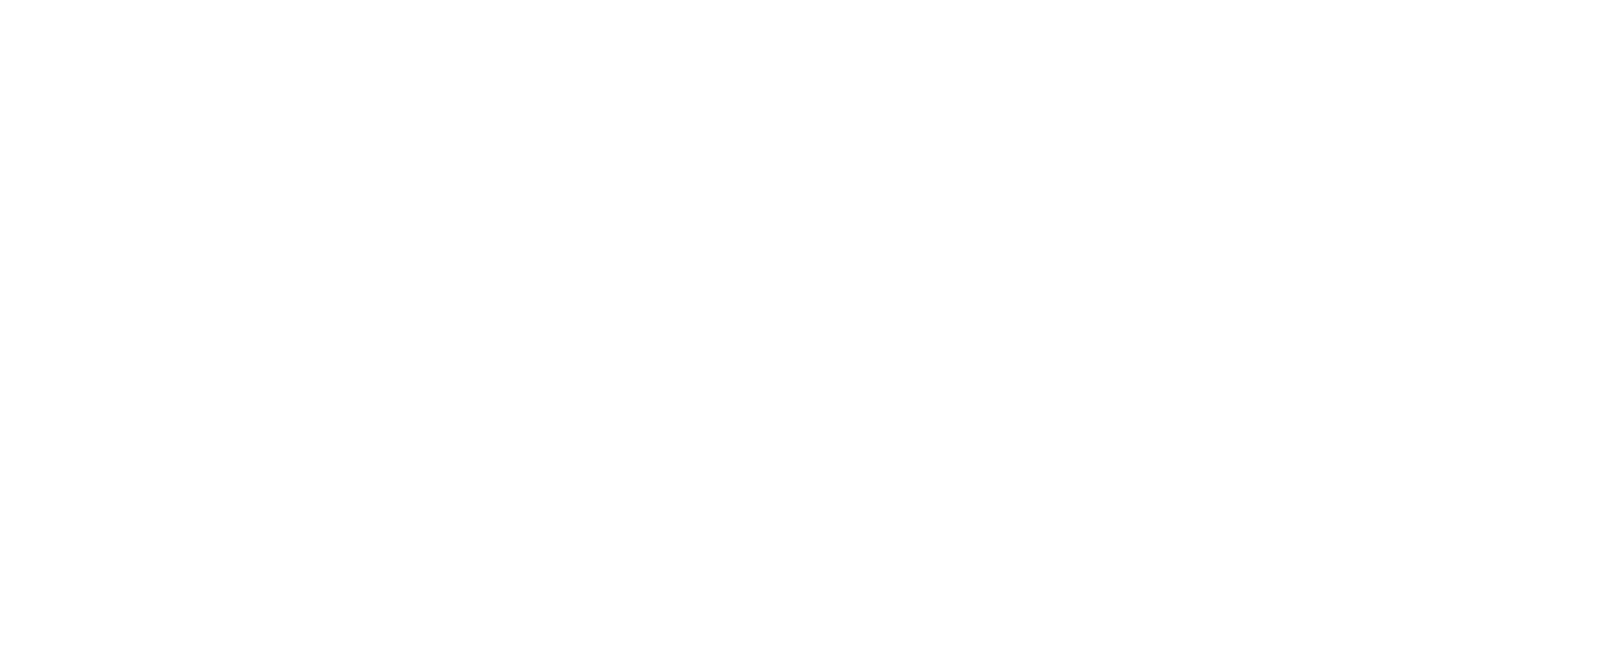 Pet Parents: Emile y Carolina Nan mascotanan: Pushi Bettie y e cachonan Elsa y Anna 